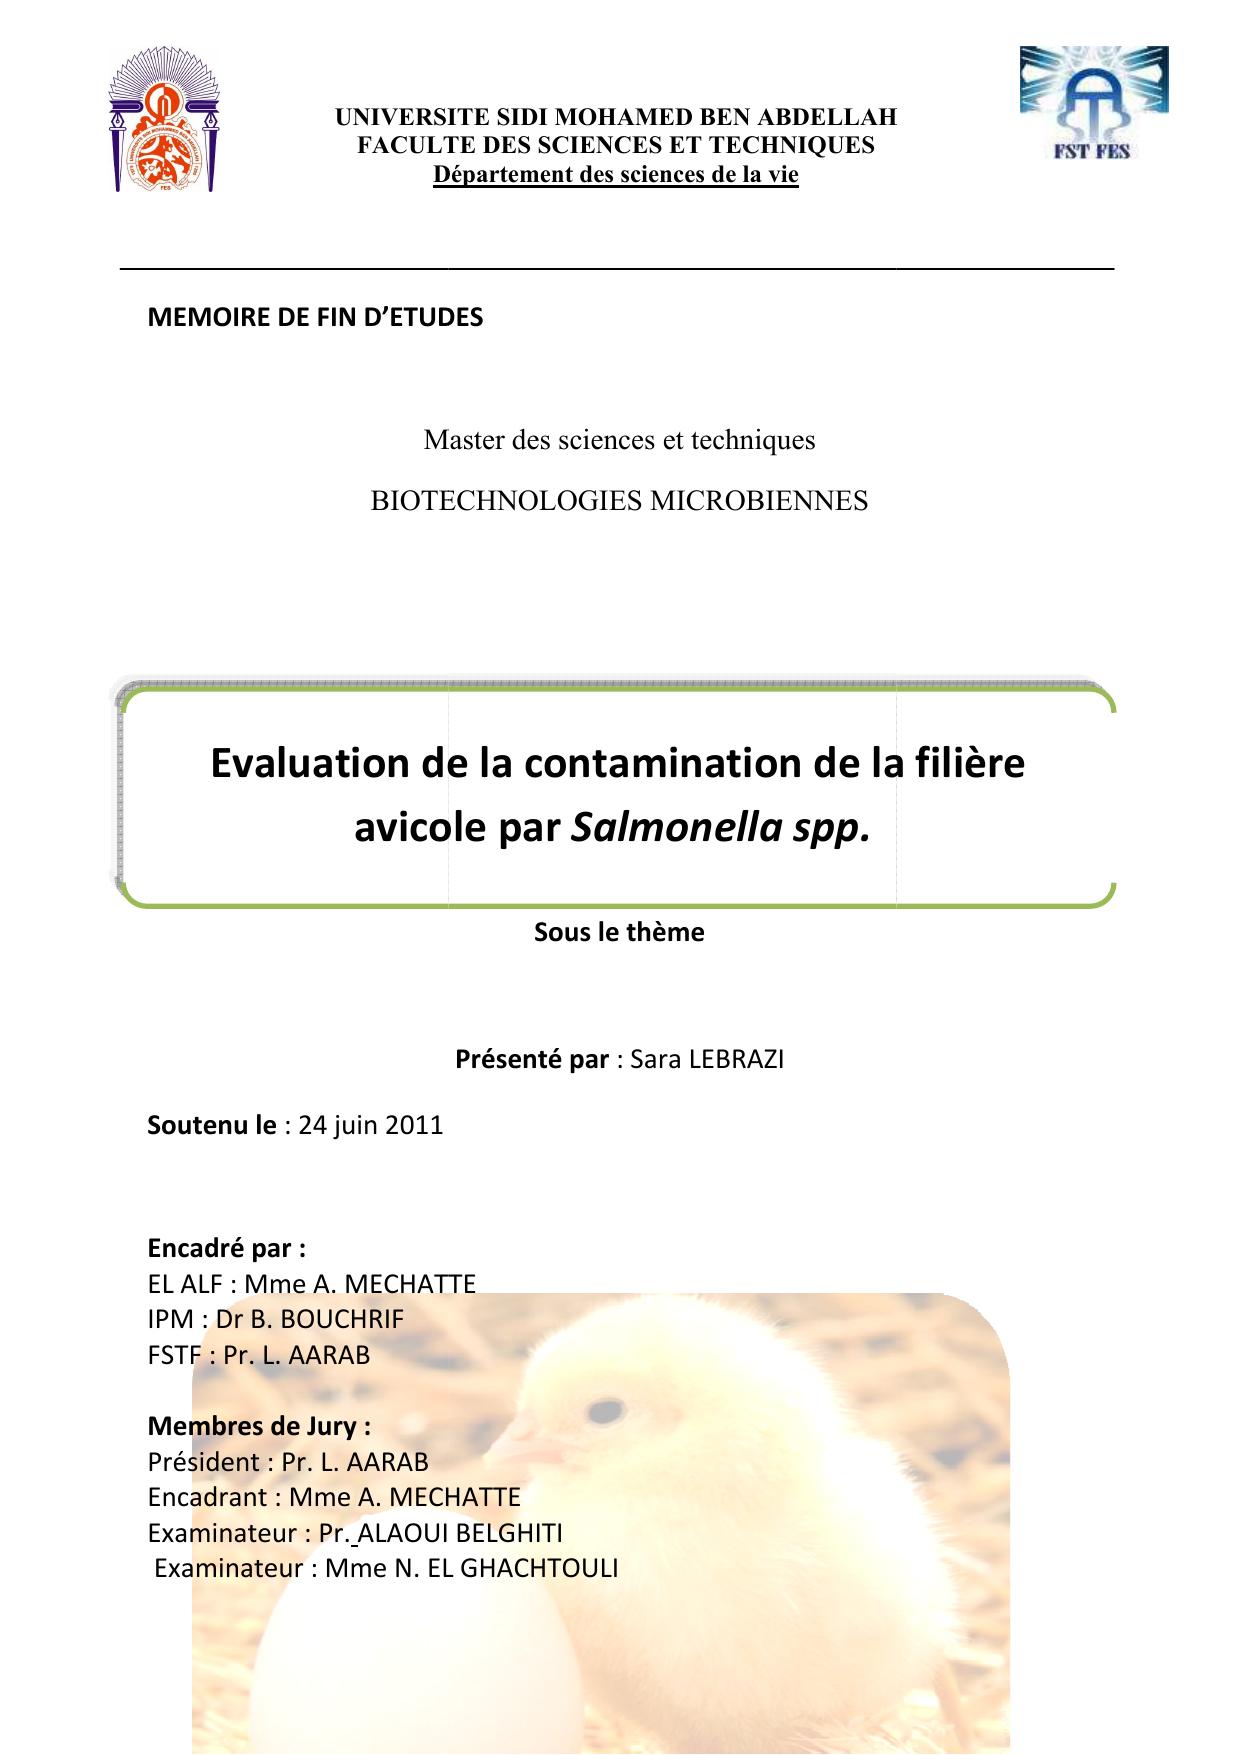 Evaluation de la contamination de la filière avicole par Salmonella spp.